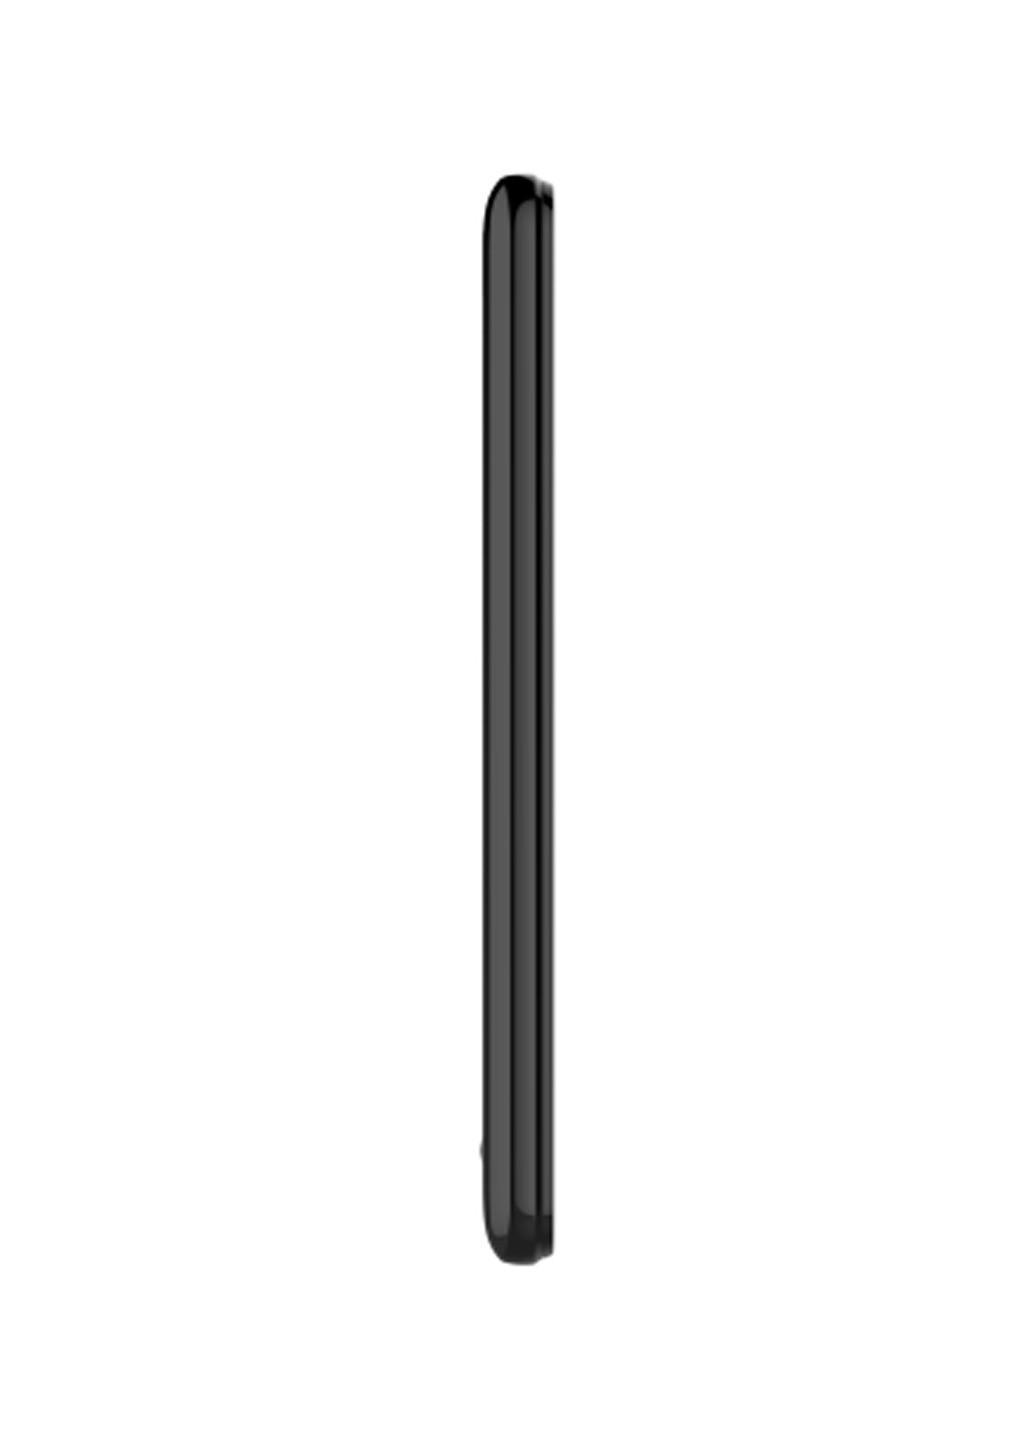 Смартфон ZTE blade a5 2/16gb black (133603430)